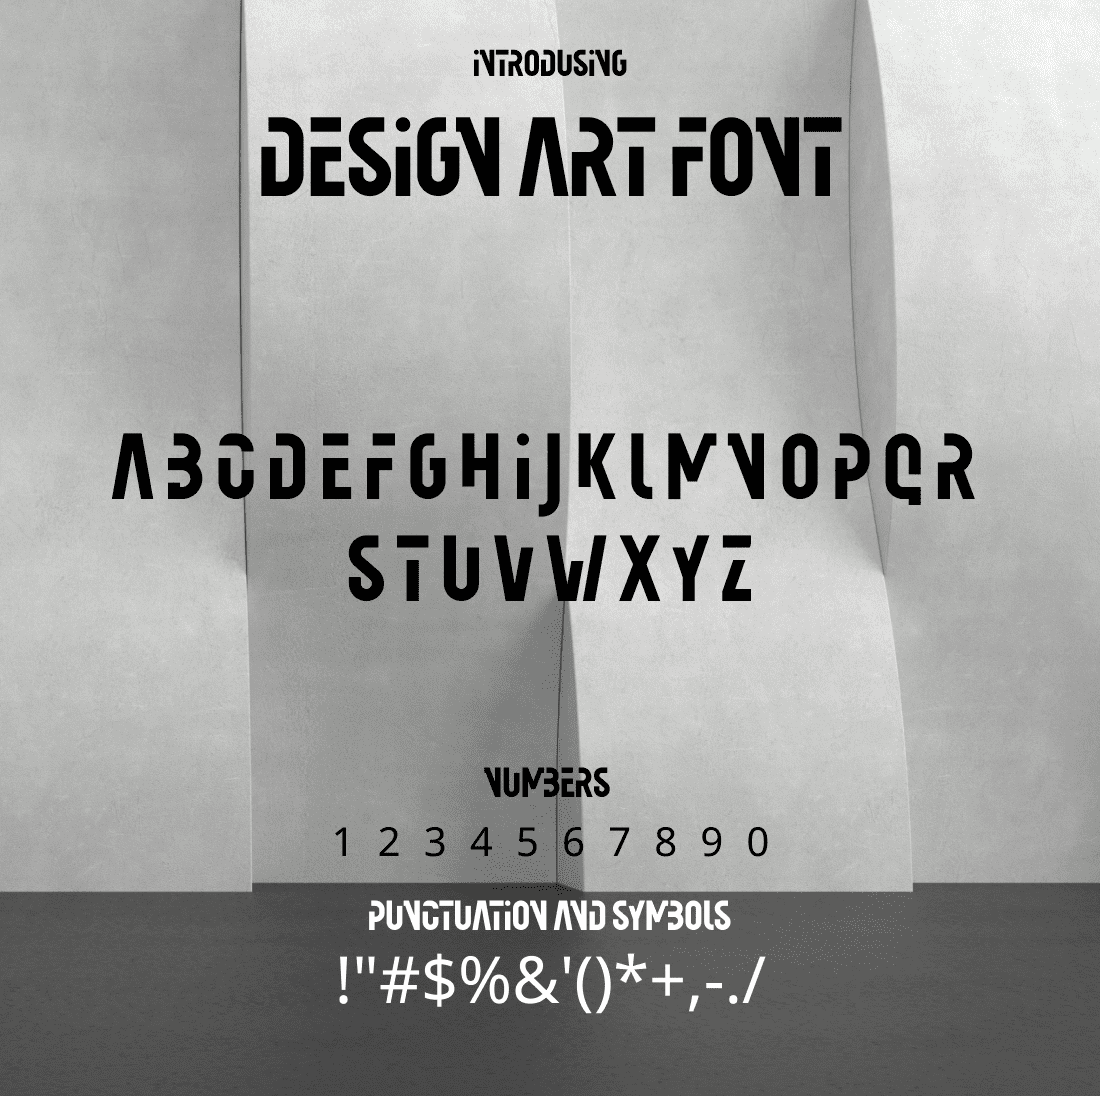 Design Art Font - main image preview.